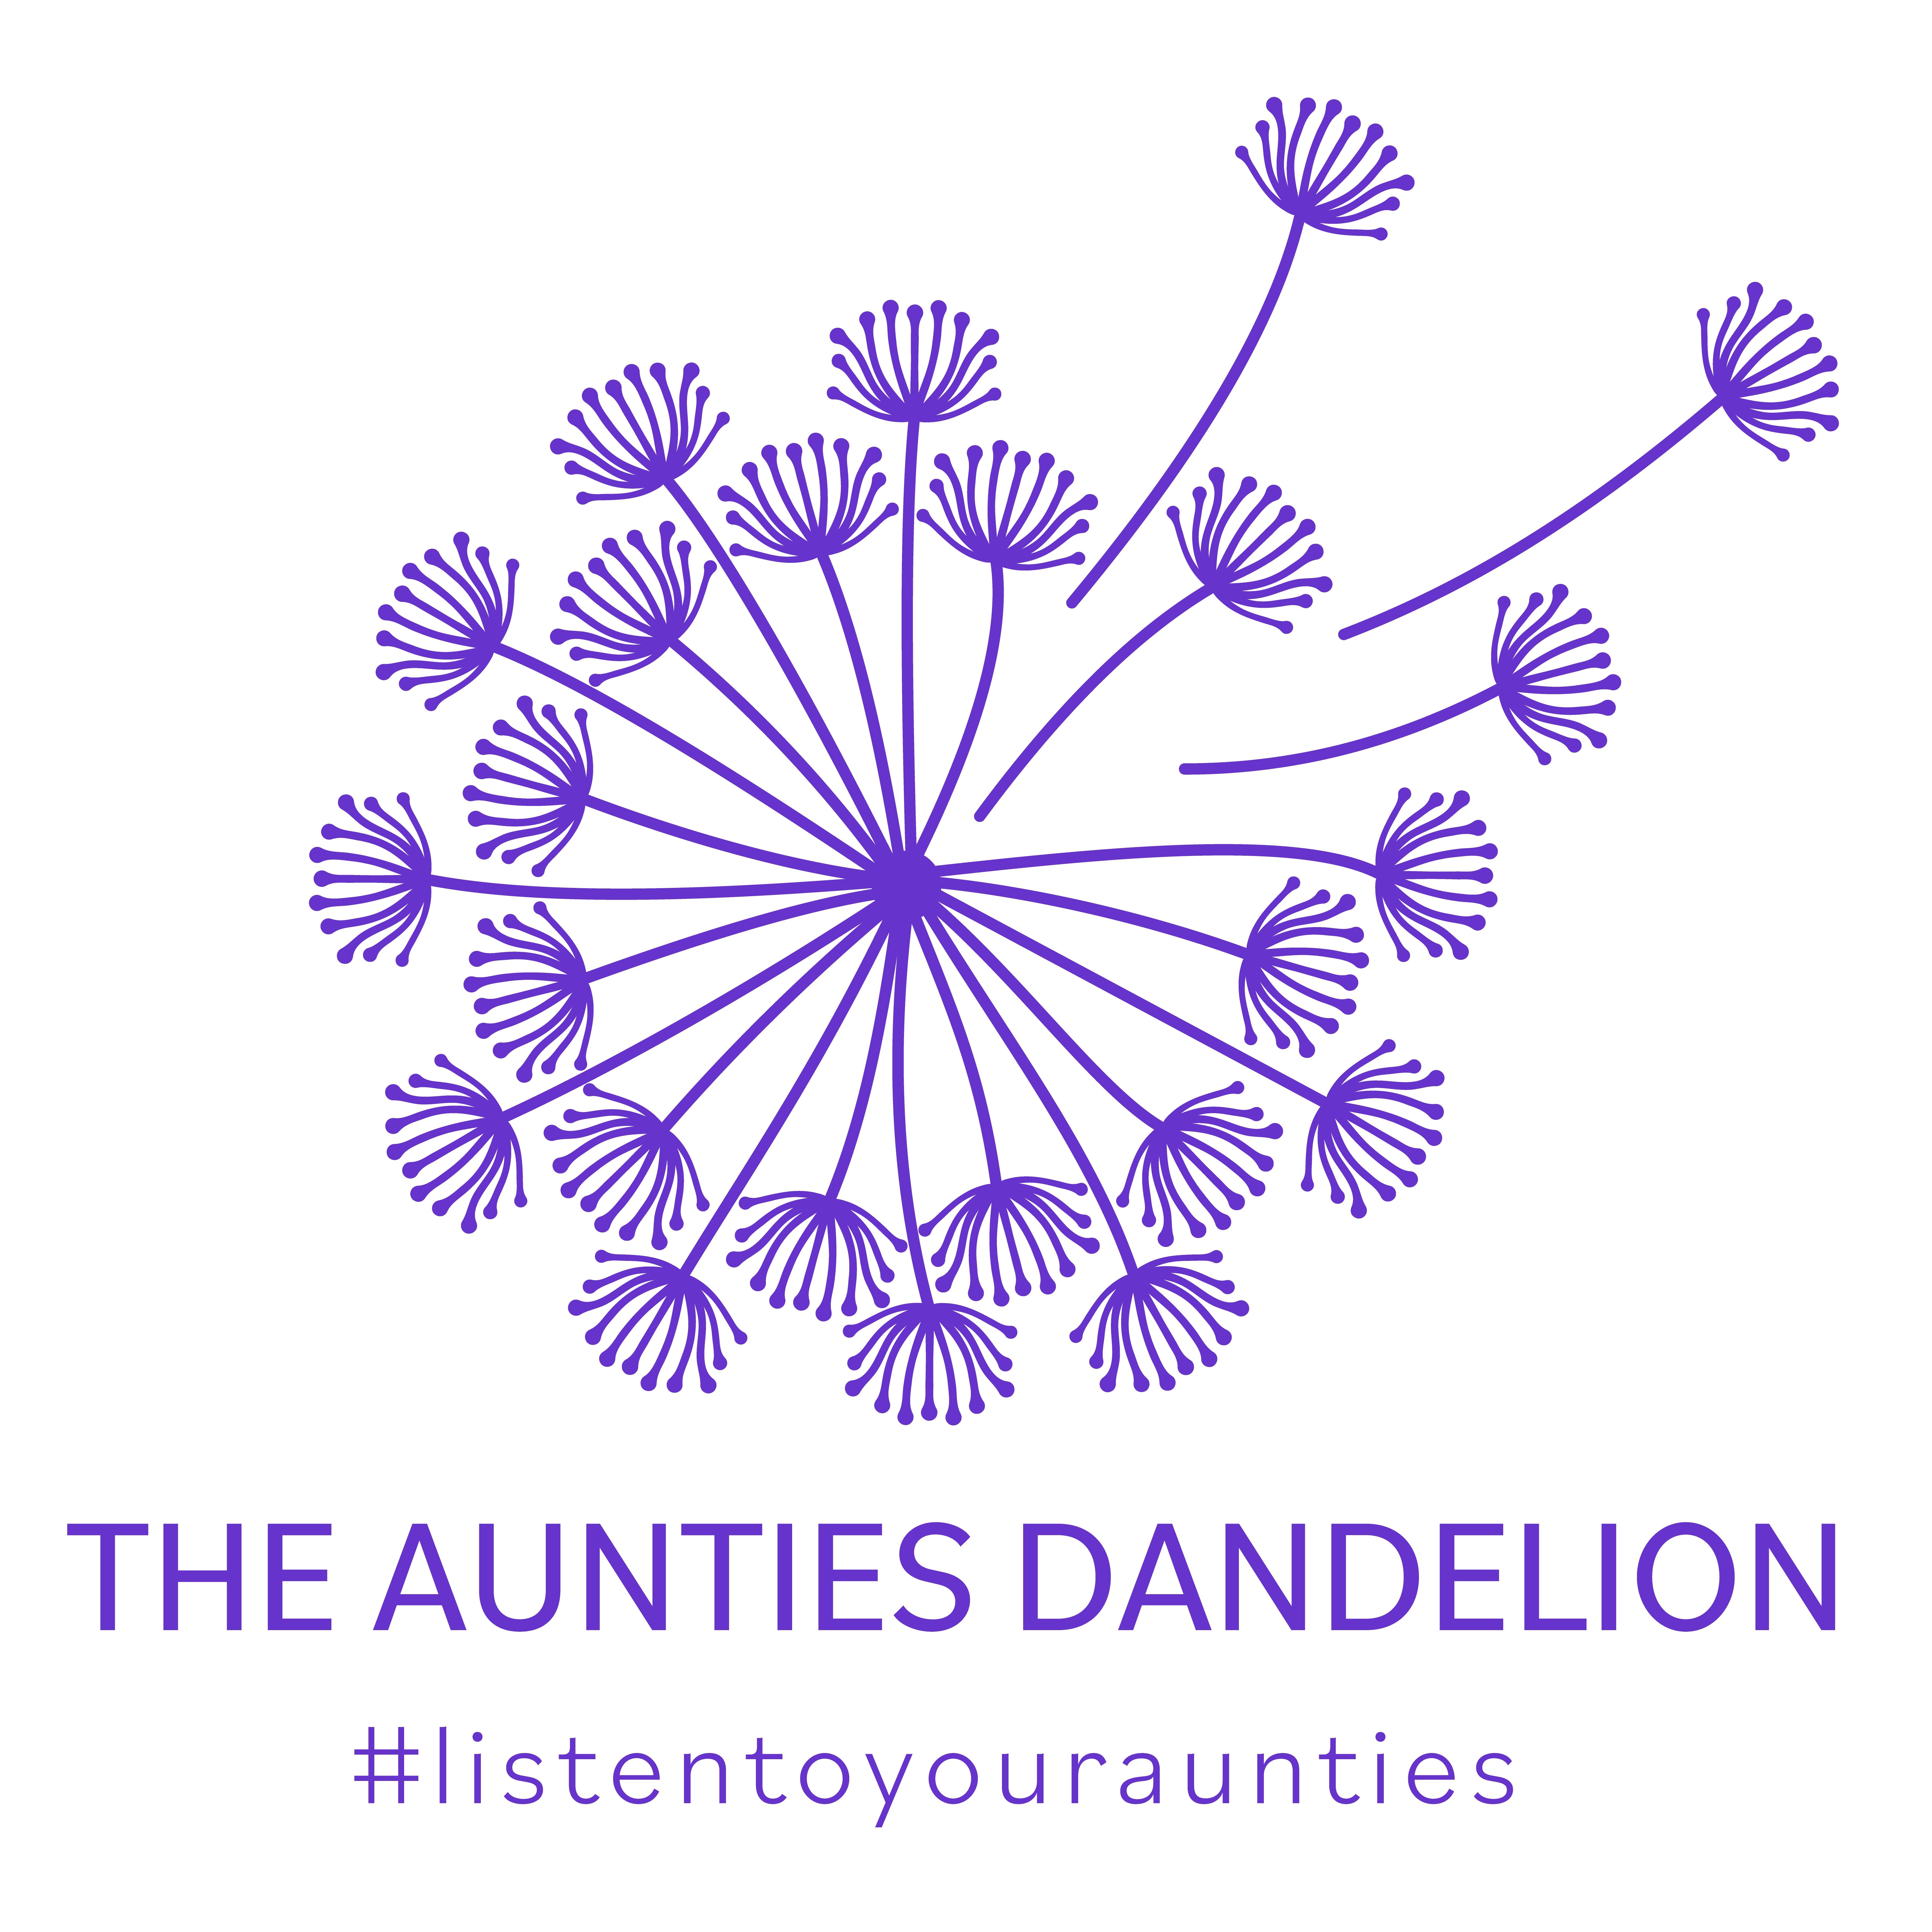 The Aunties Dandelion